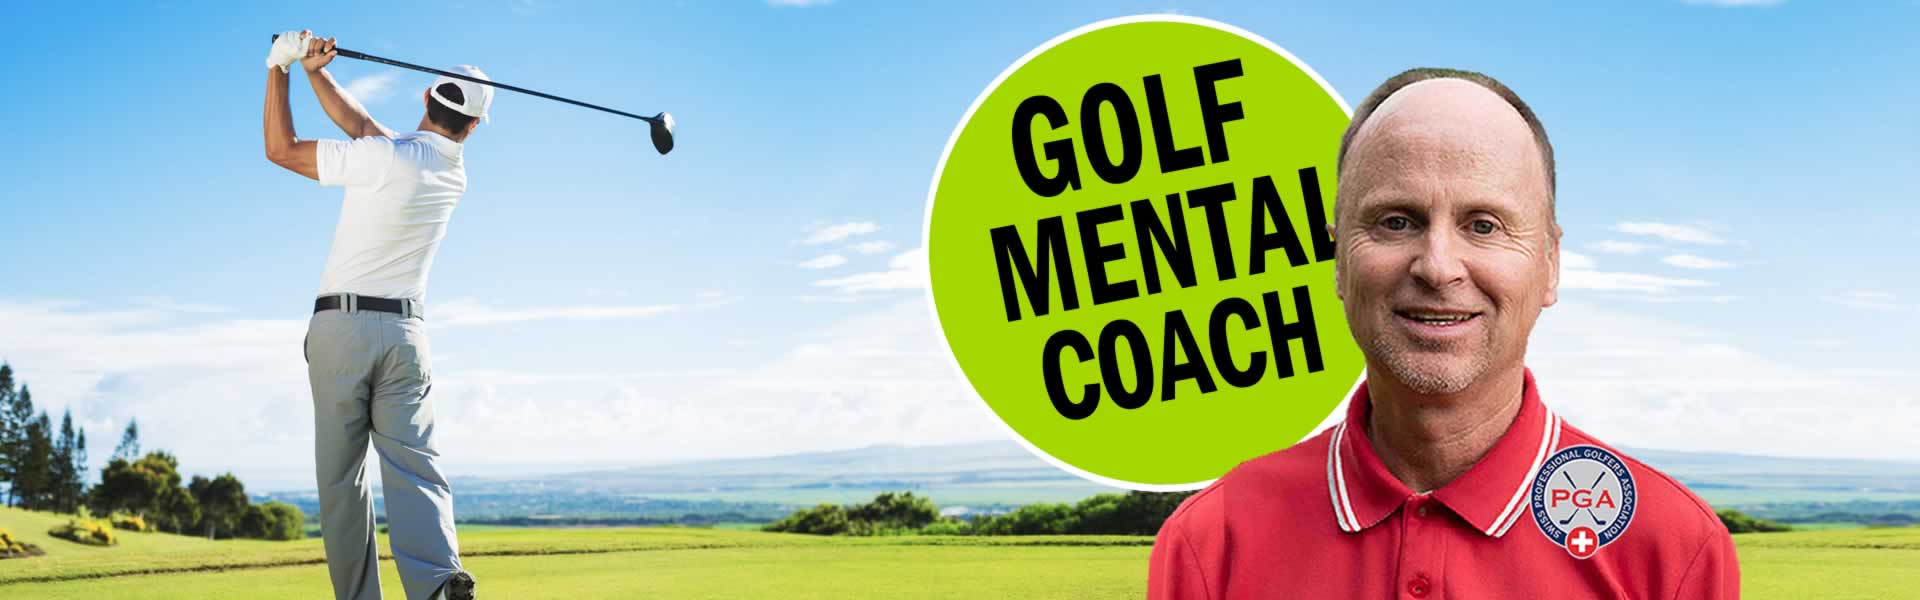 Golf-Mental-Coach-Zuerich-Golf-Pro-Coaching-Thierry-Rombaldi-02